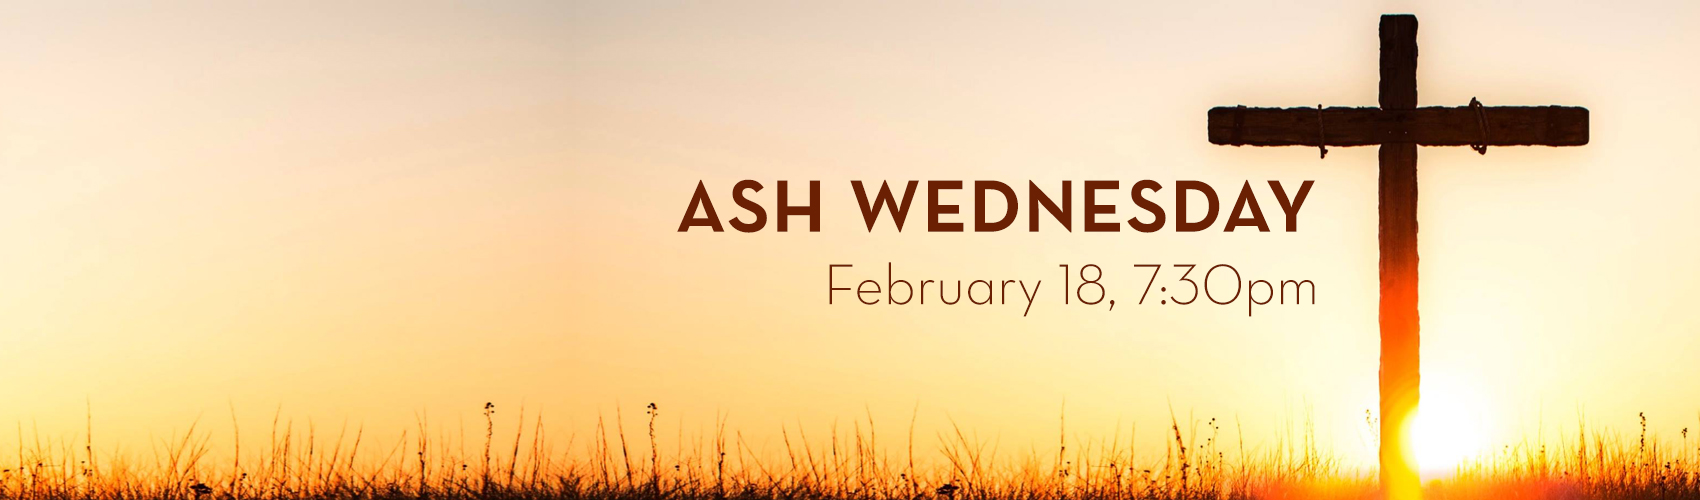 ash-wednesday-banner